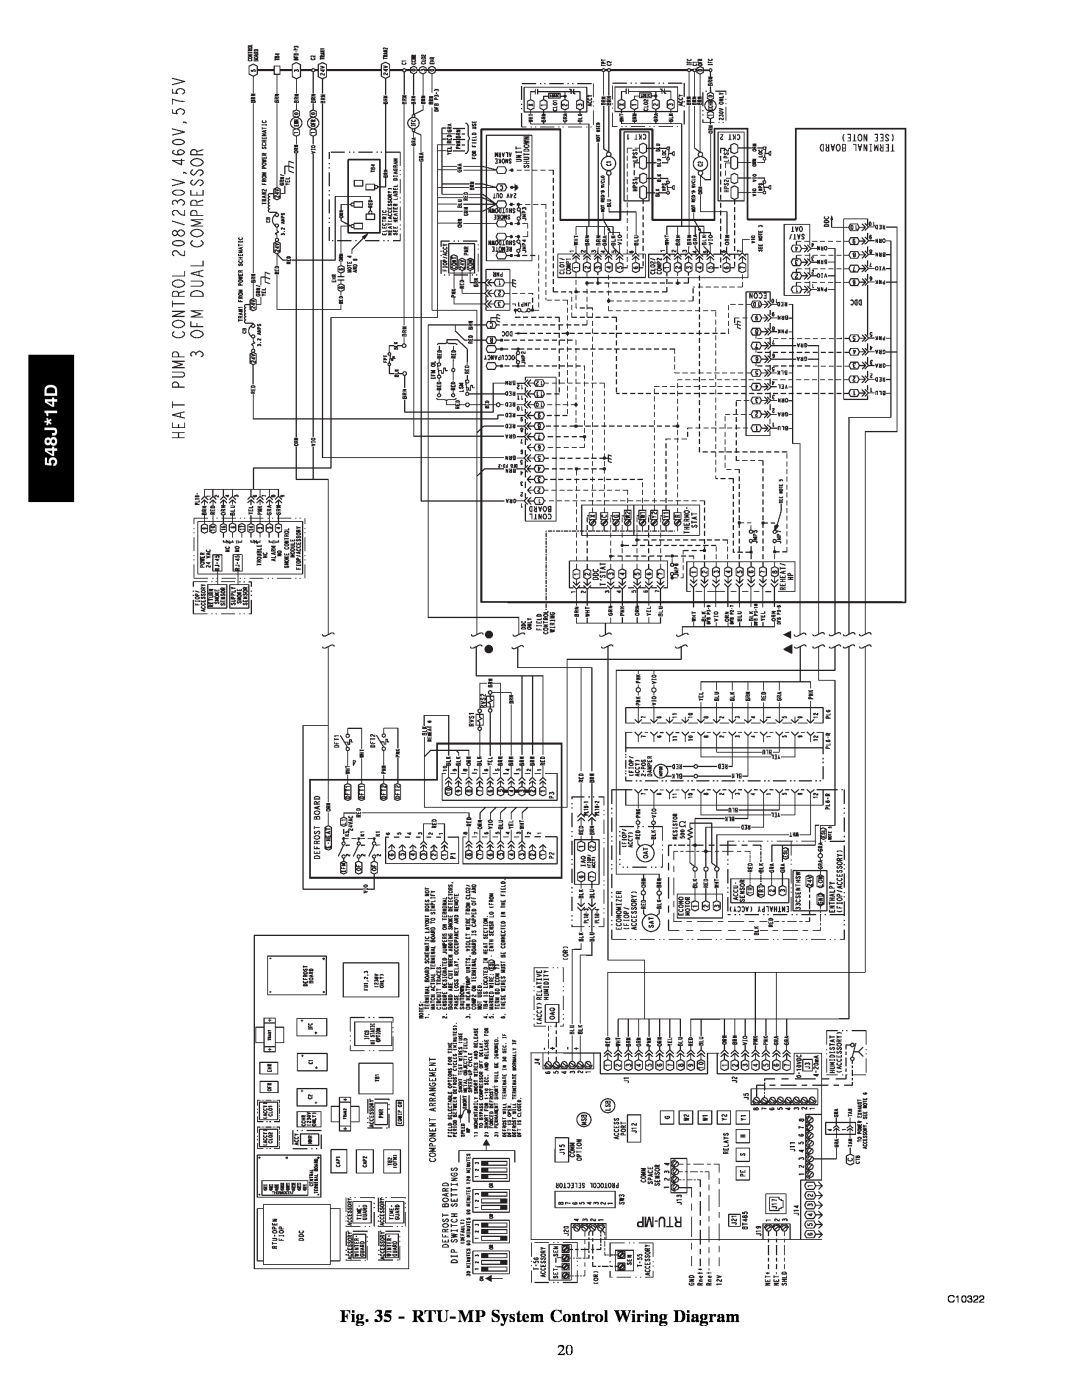 Bryant 548J*14D installation instructions RTU-MP System Control Wiring Diagram, C10322 